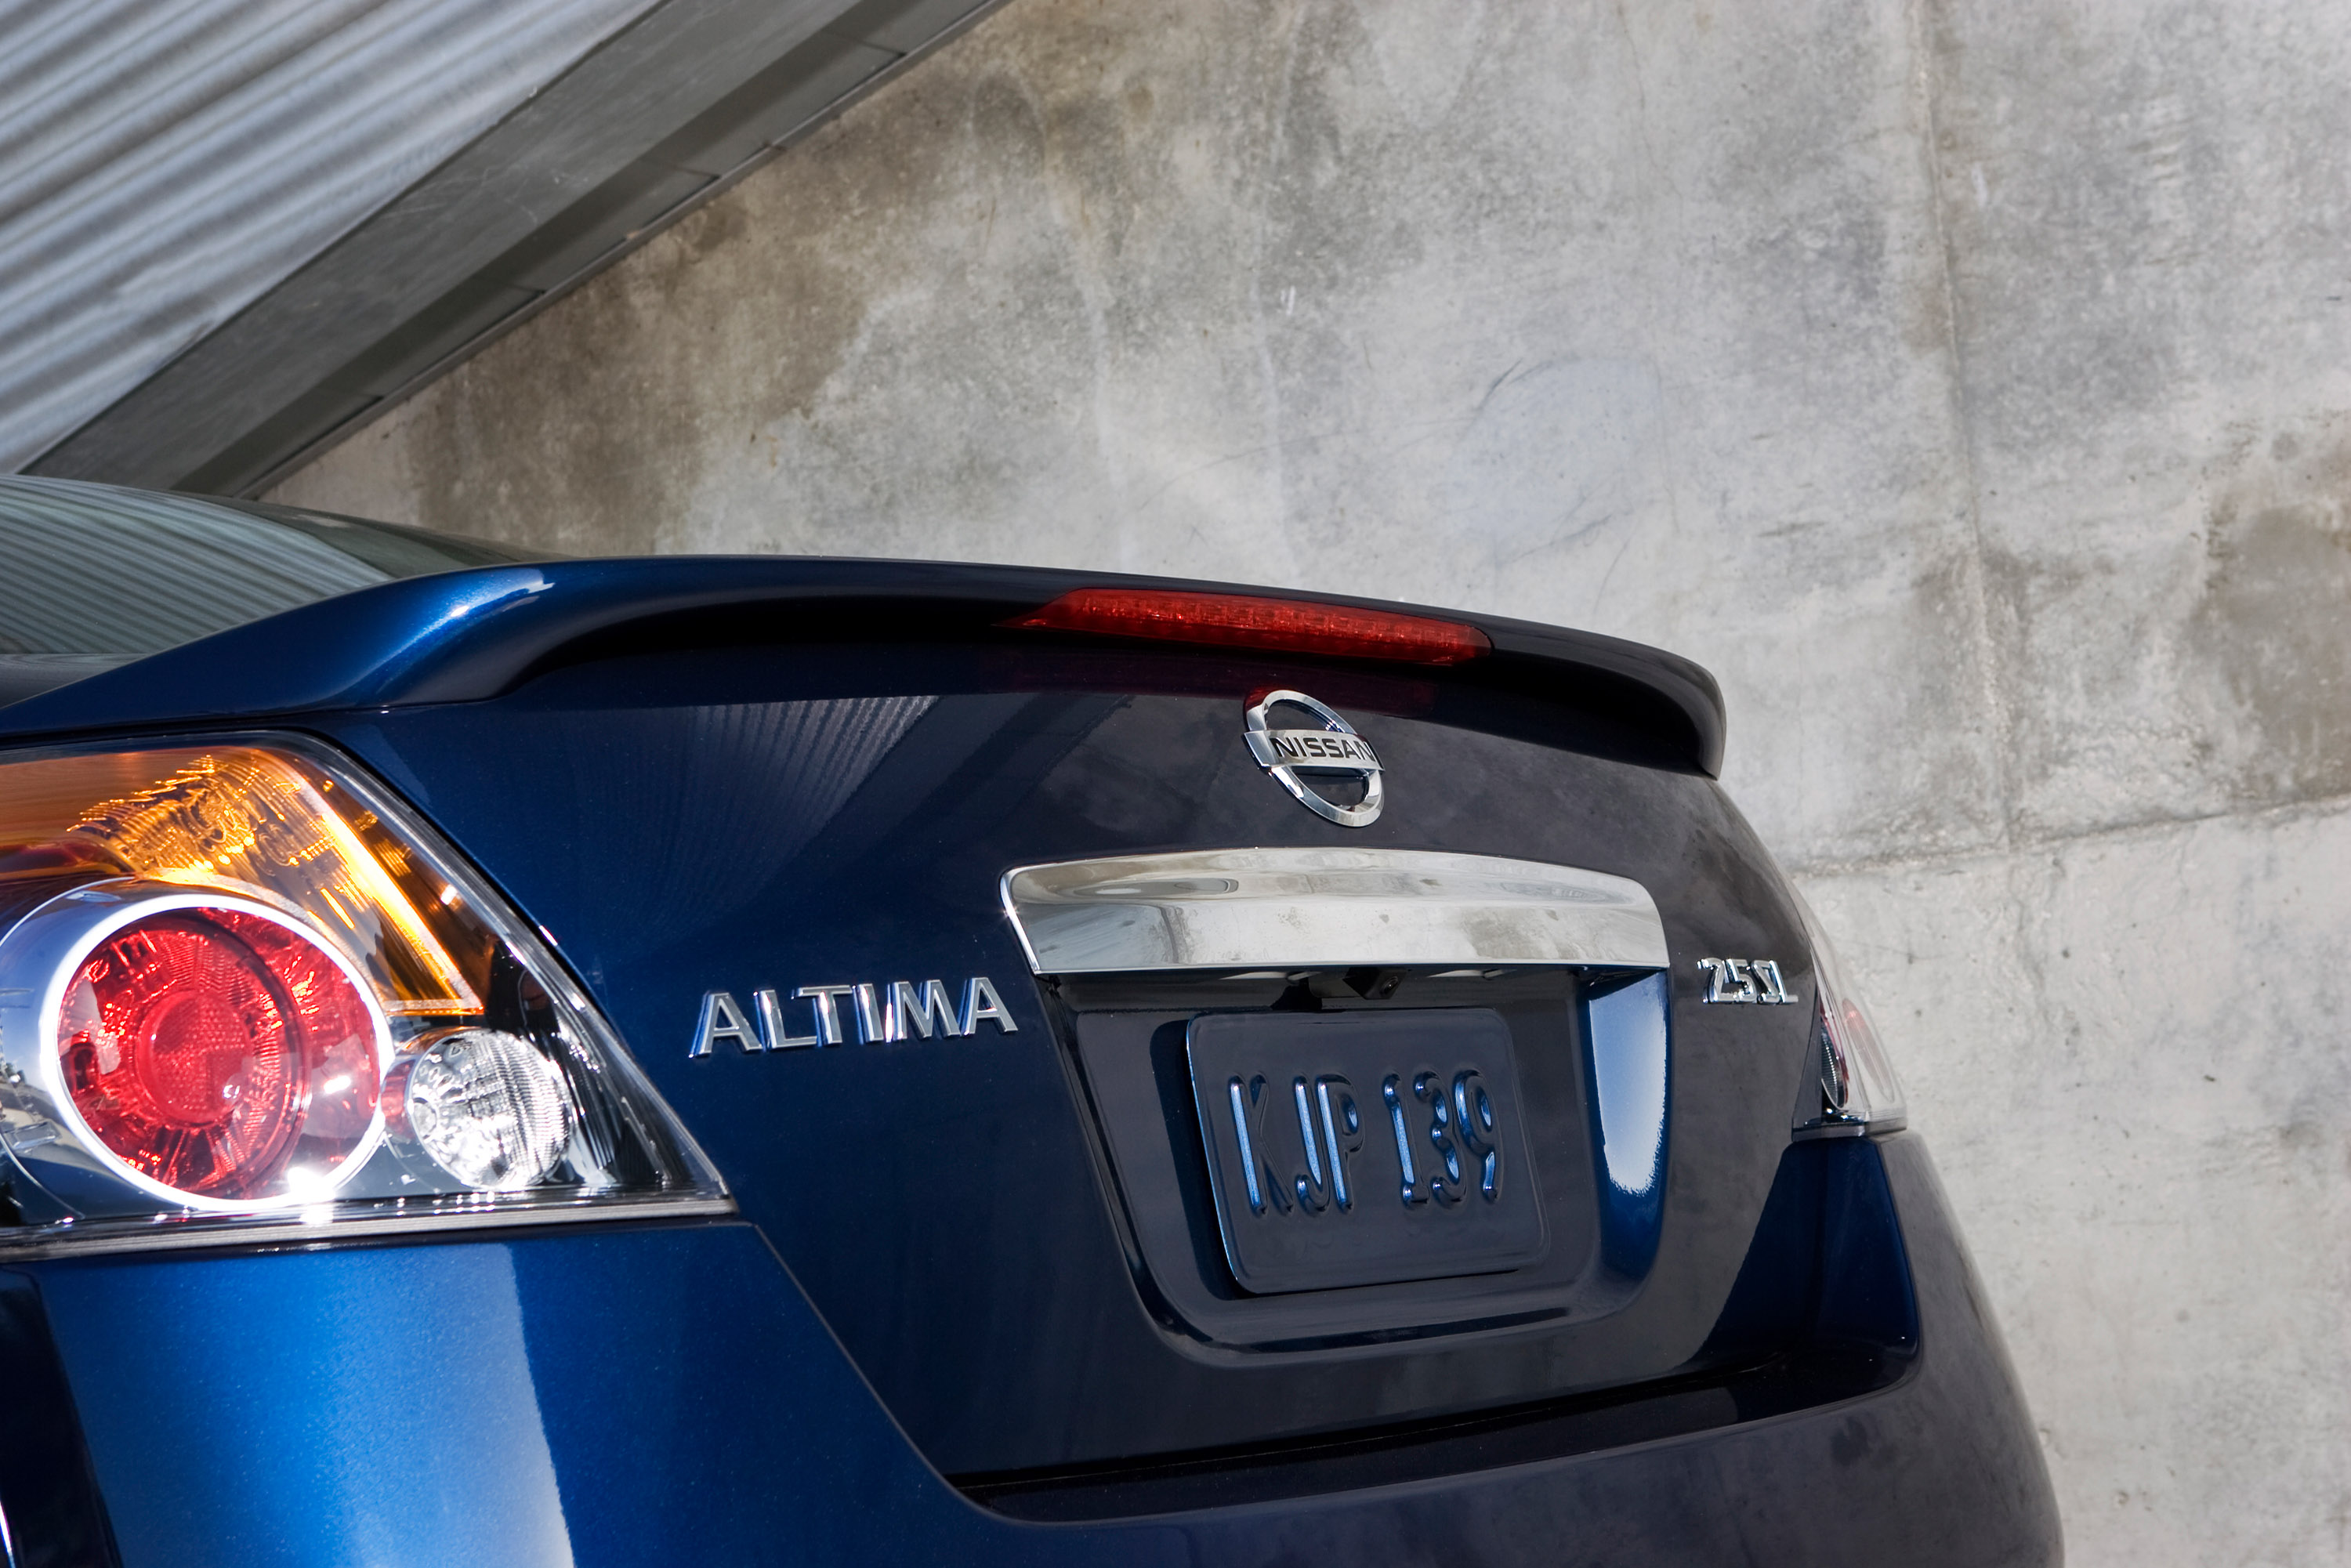 Nissan Altima Sedan